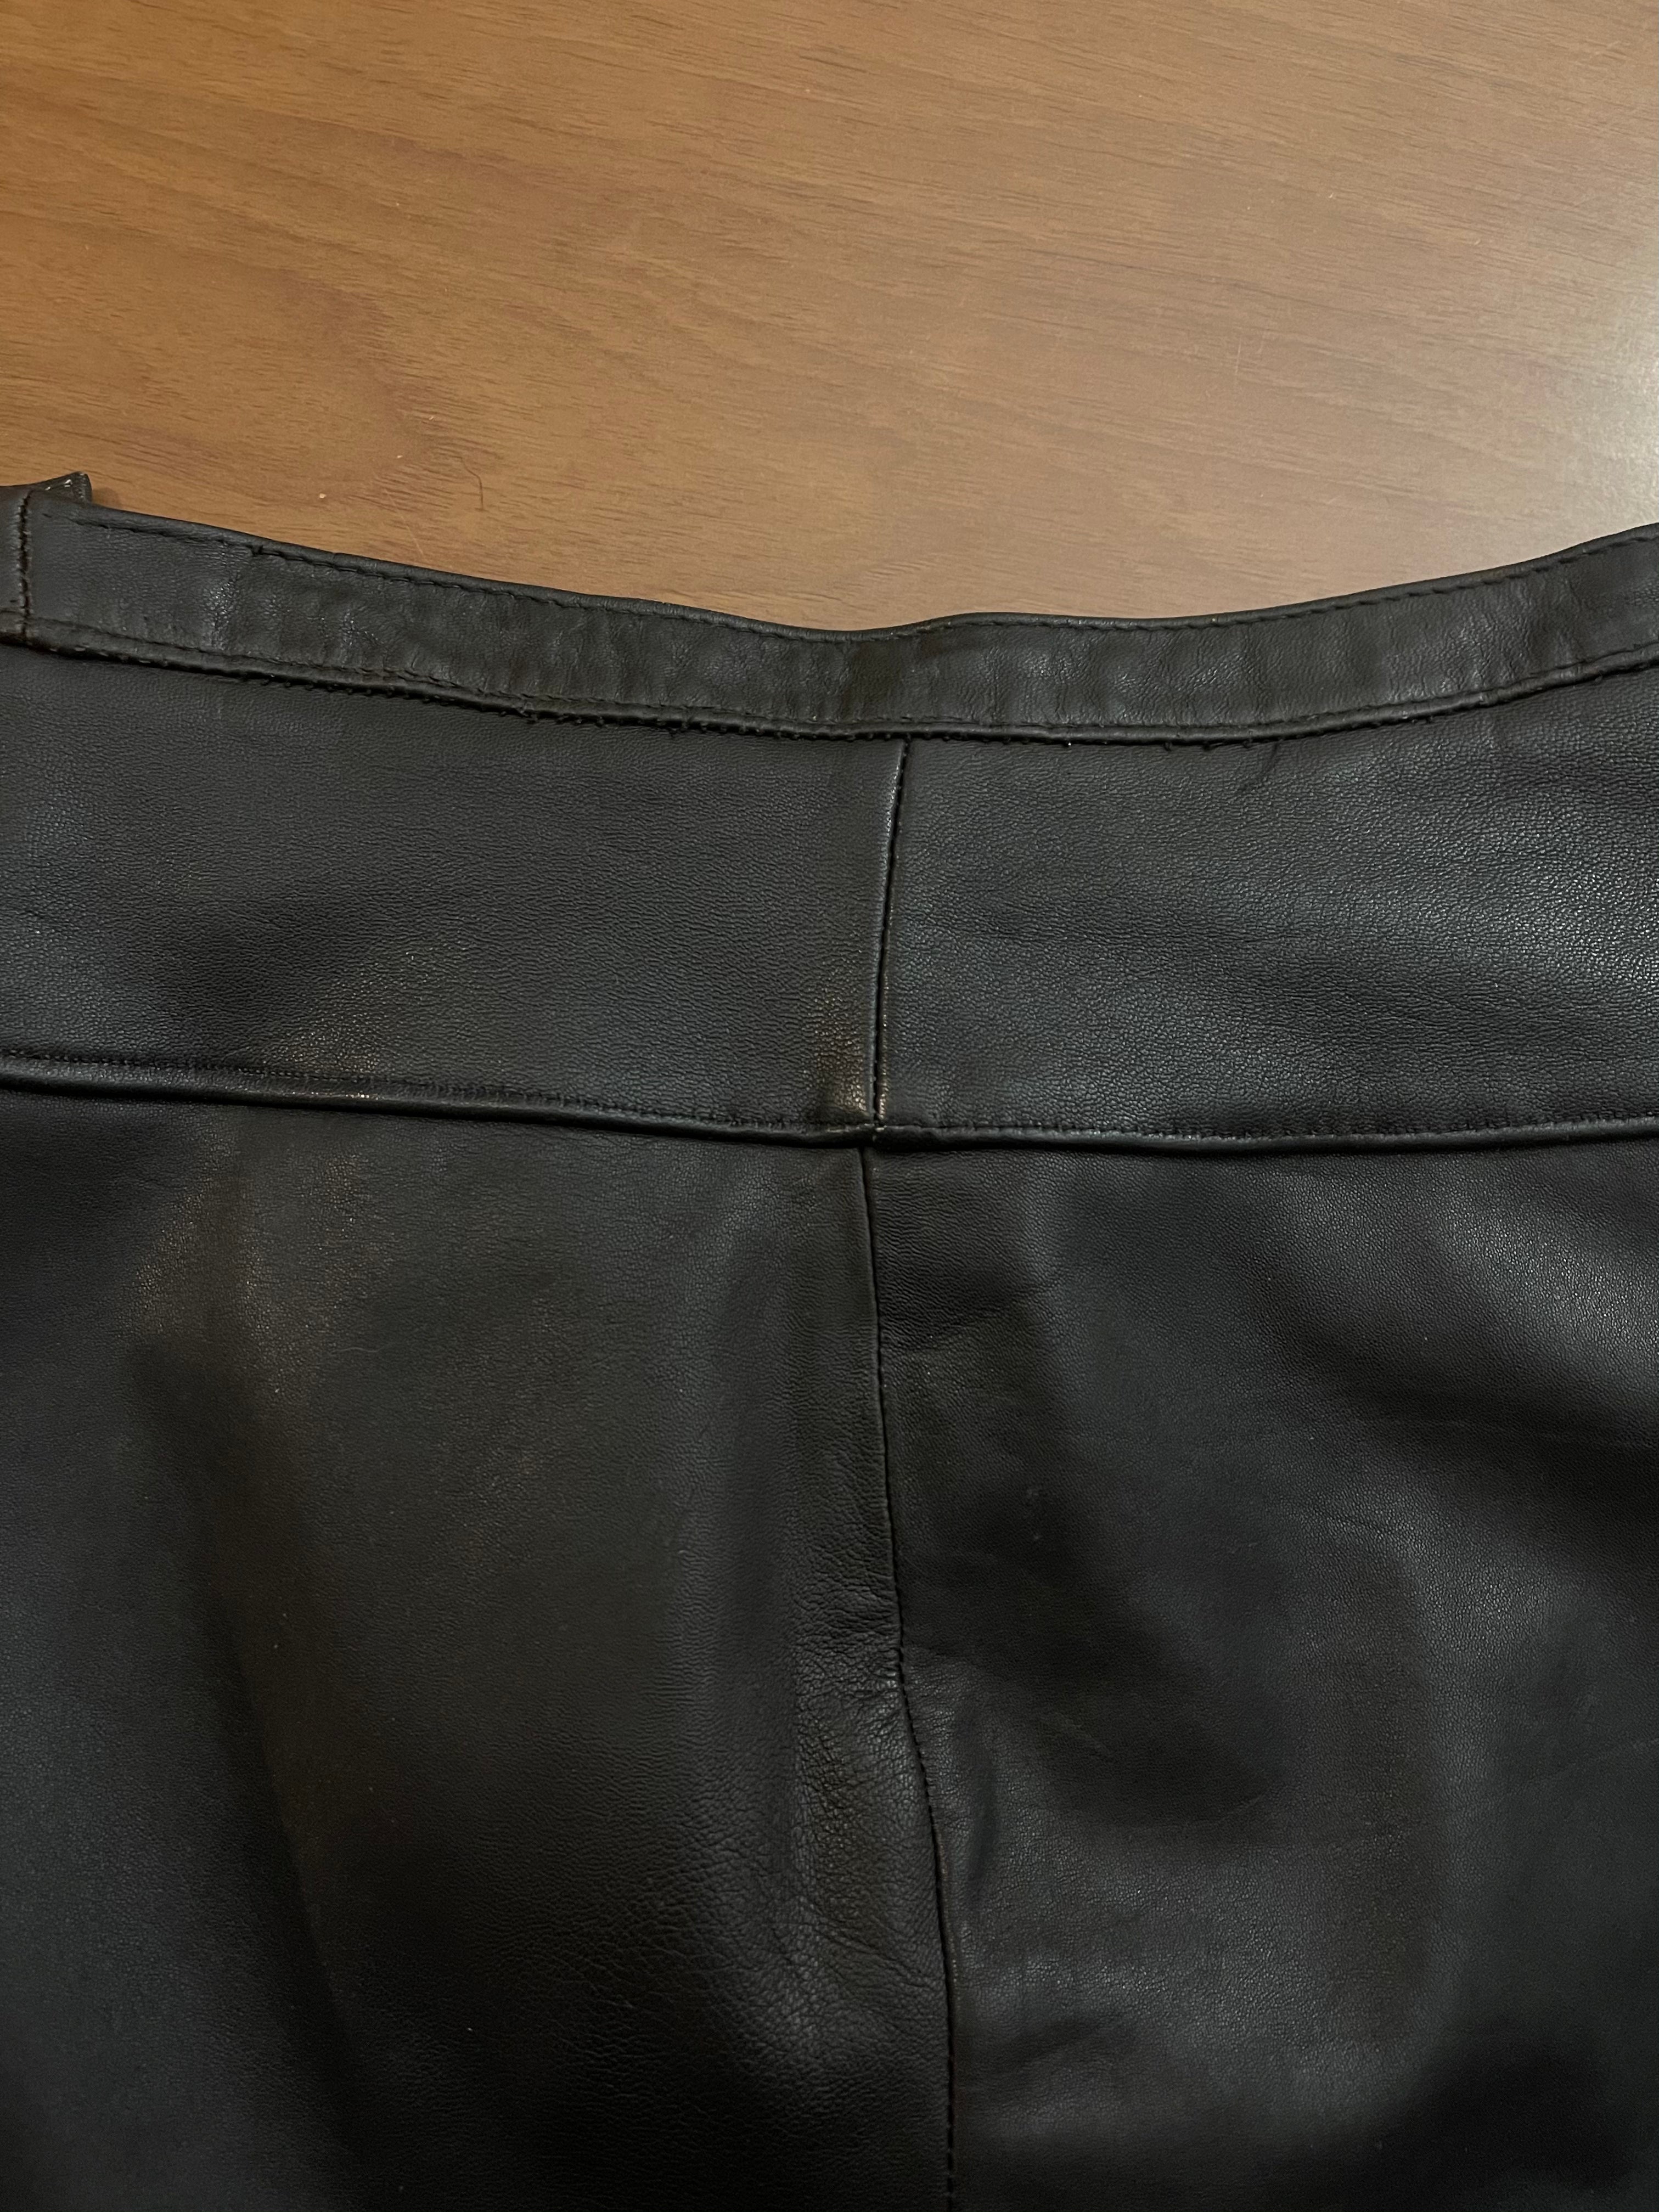 Brown nappa leather skirt